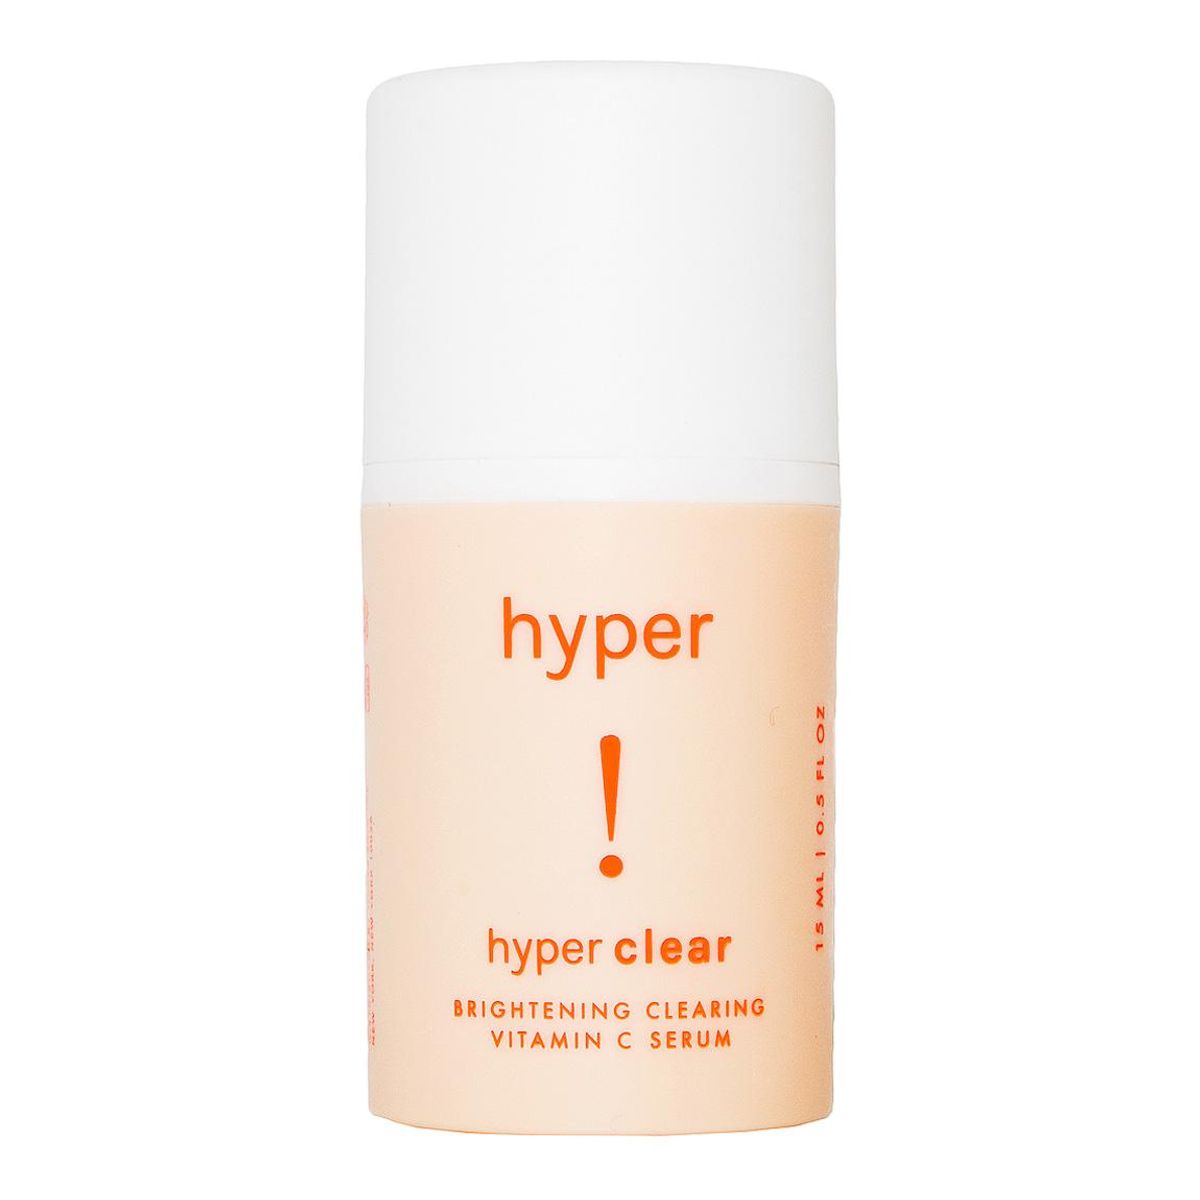 Hyper Clear Brightening Clearing Vitamin C Serum